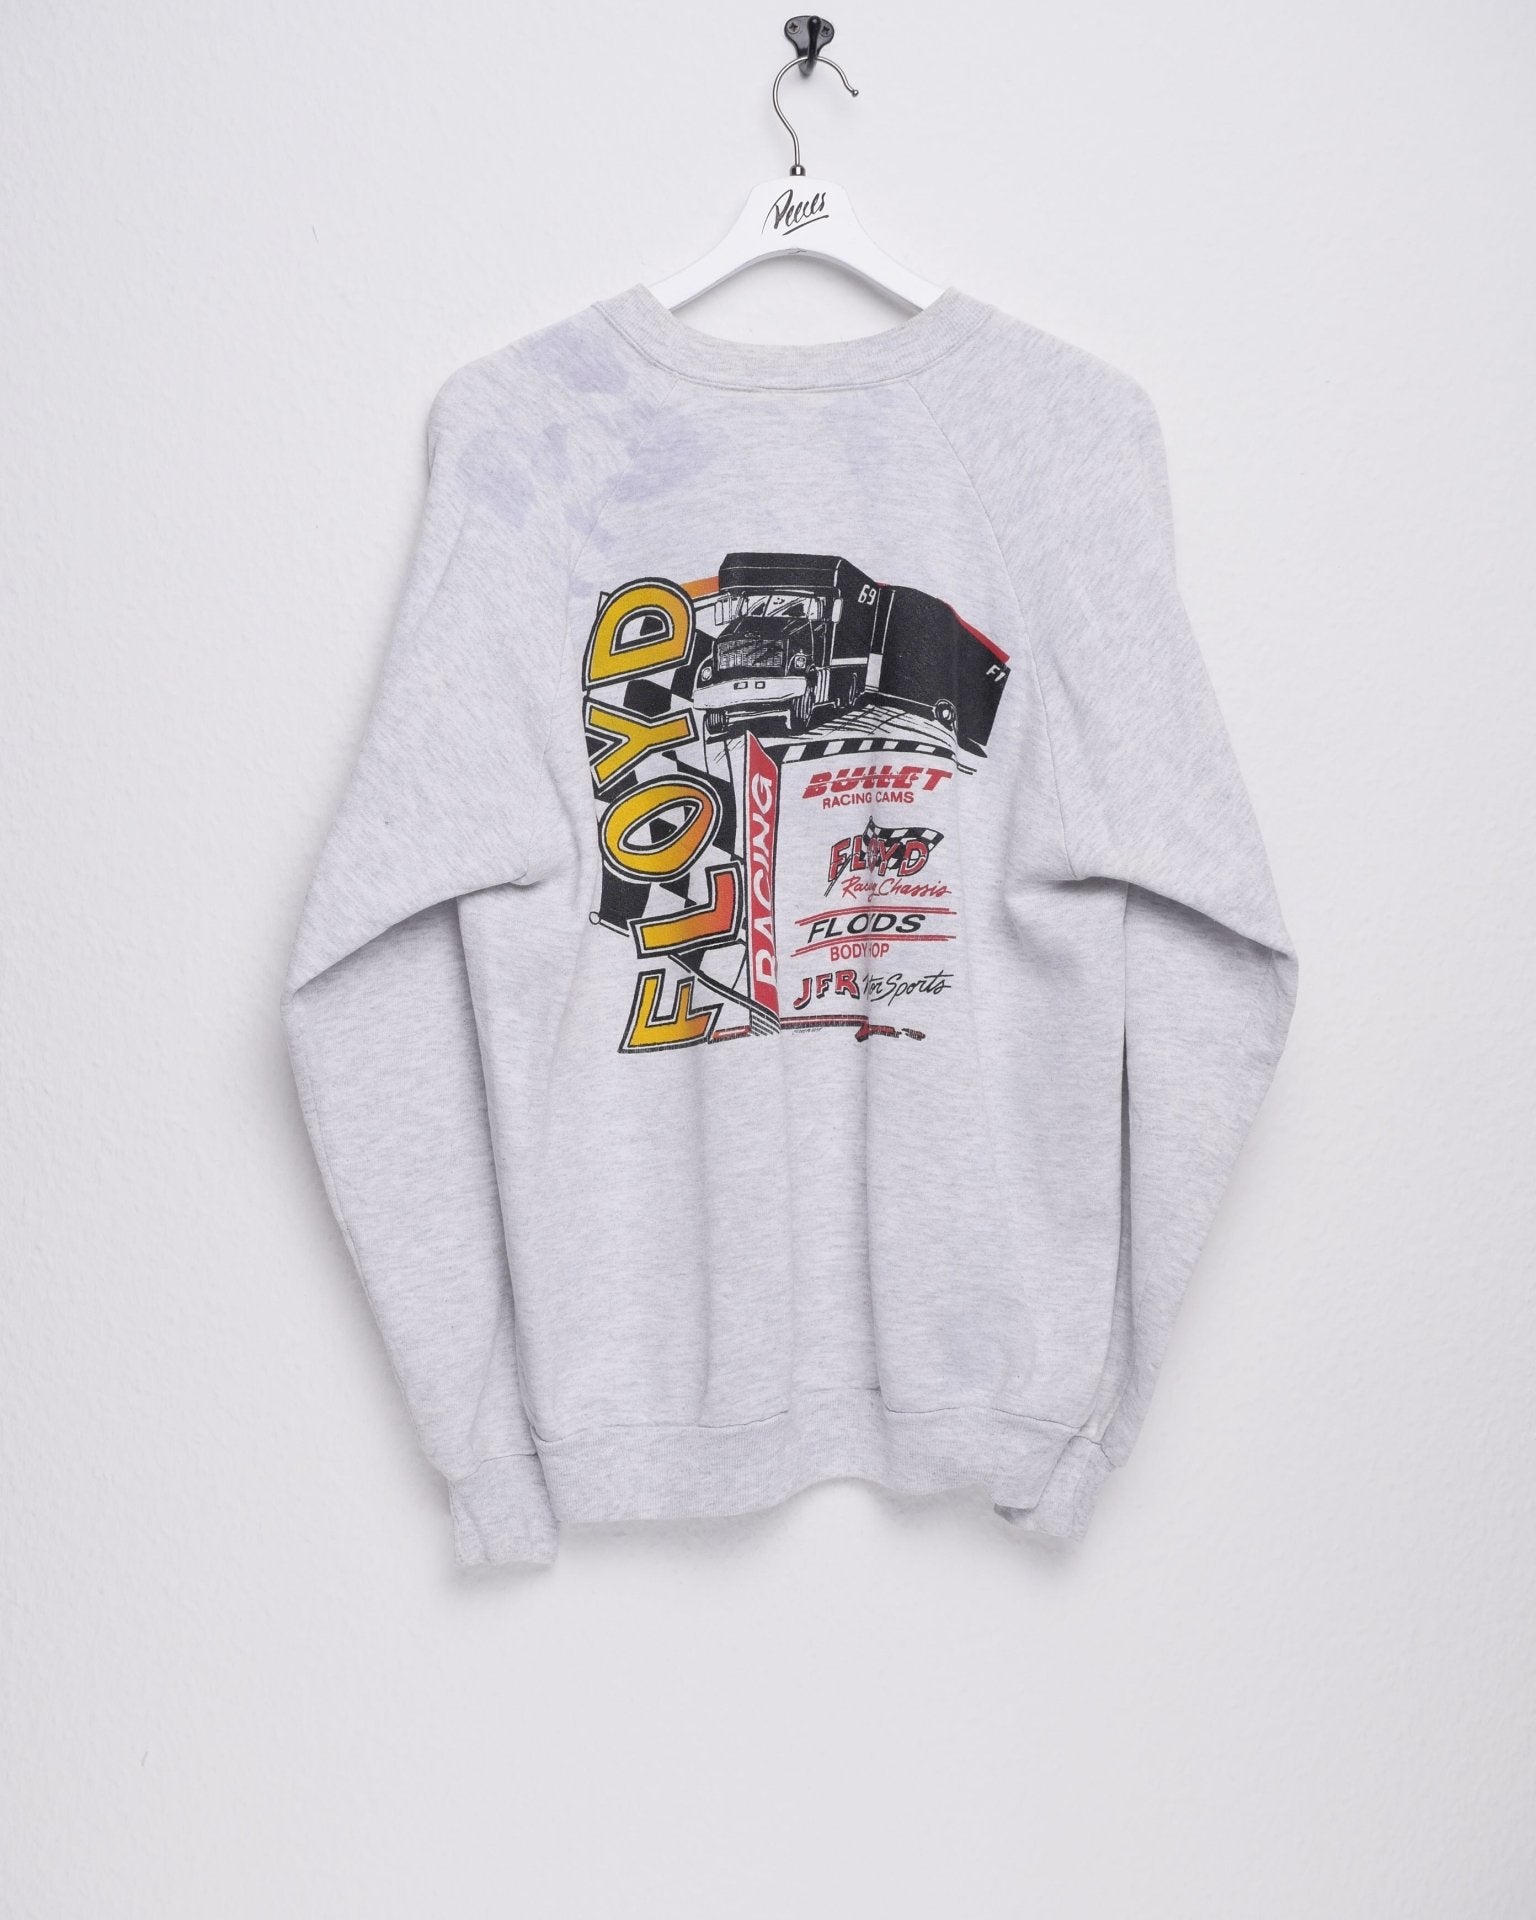 racing 'Jeff Floyd' printed Graphic grey Sweater - Peeces